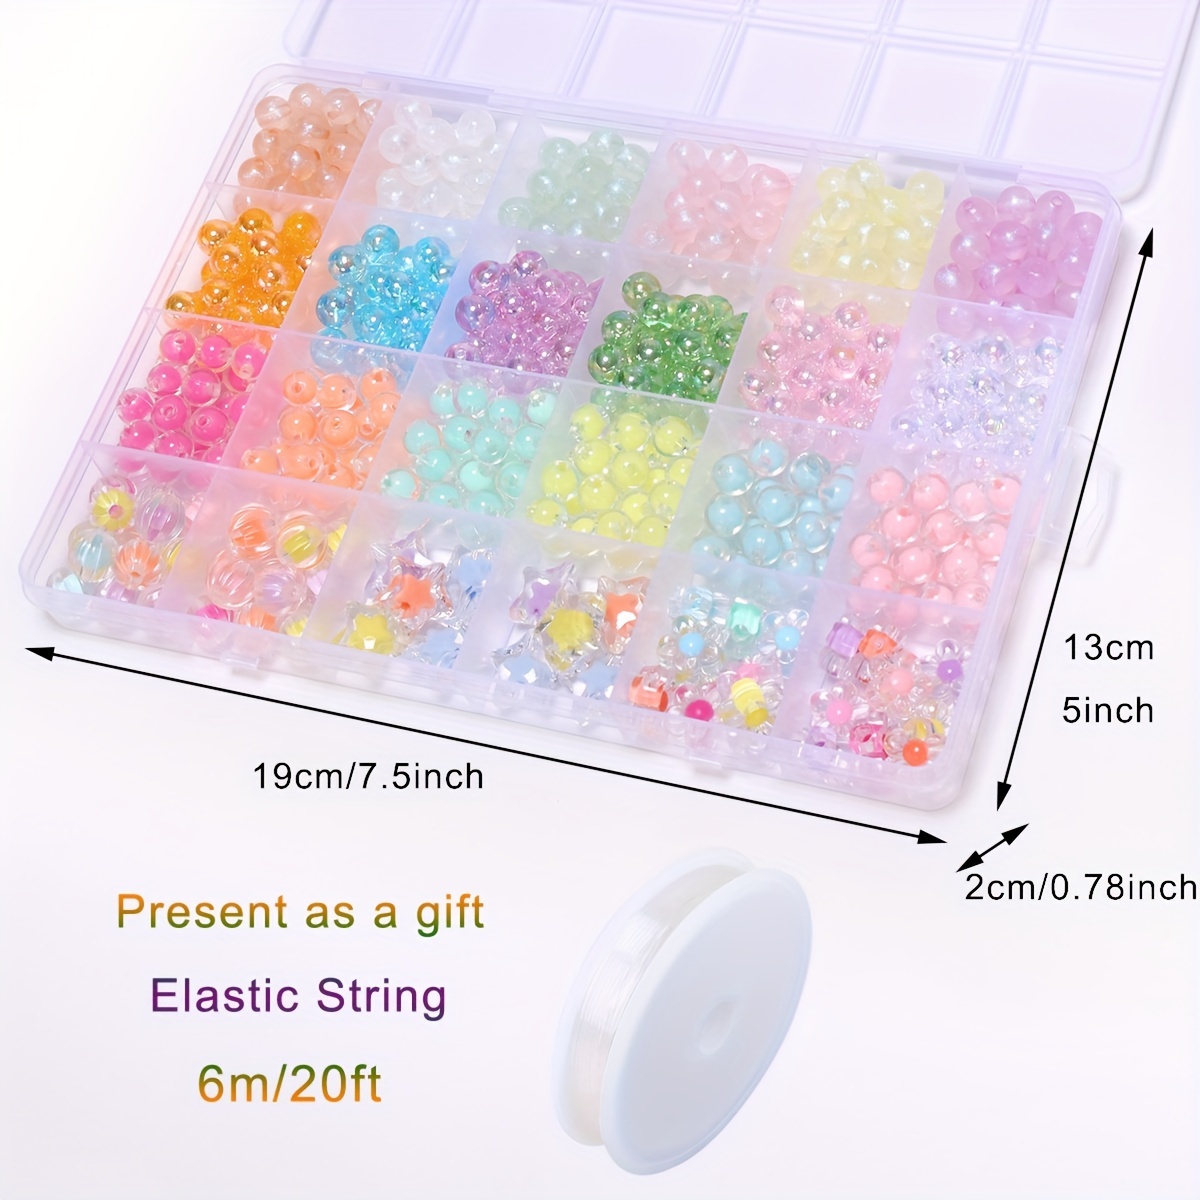 NEW: Beading Kits in Mini Gift Tins